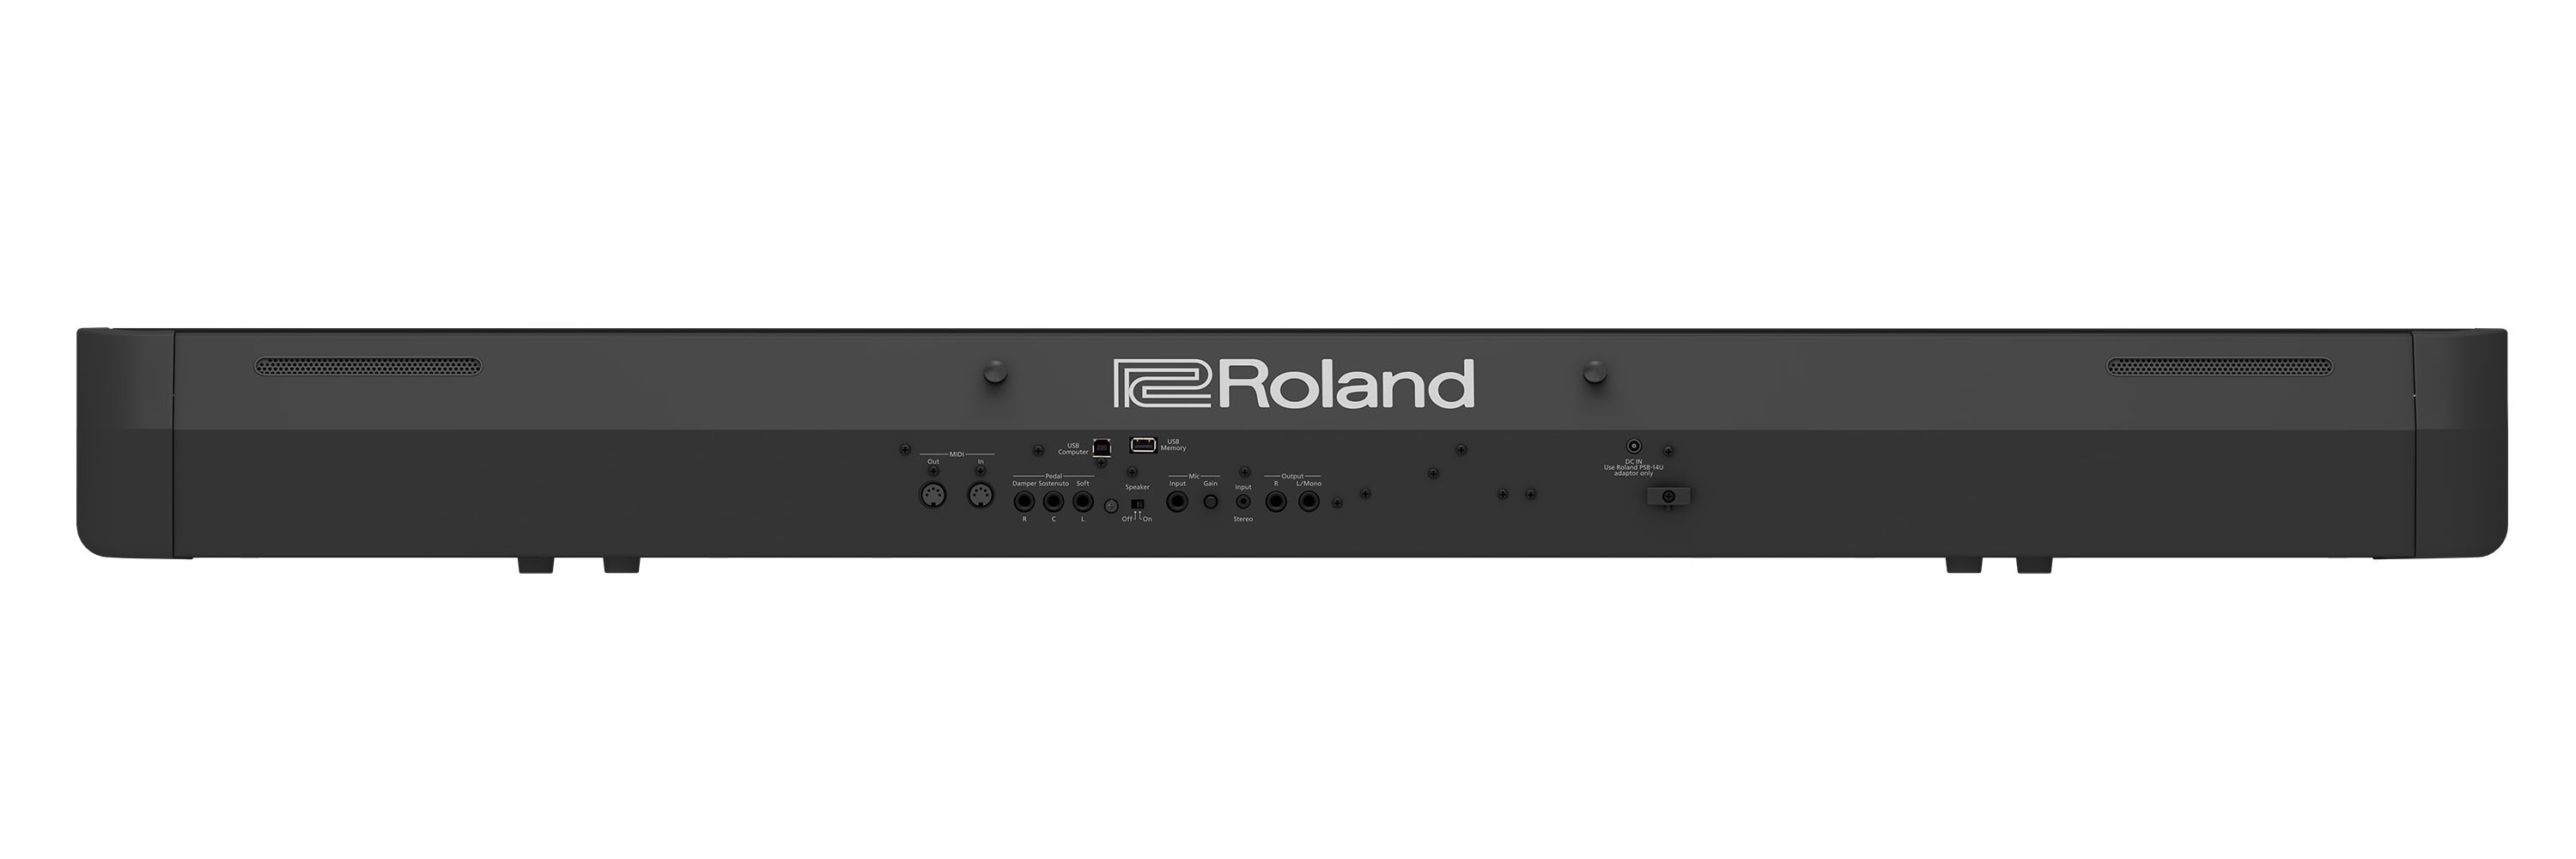 Roland Fp-90x Bk - Piano digital portatil - Variation 3